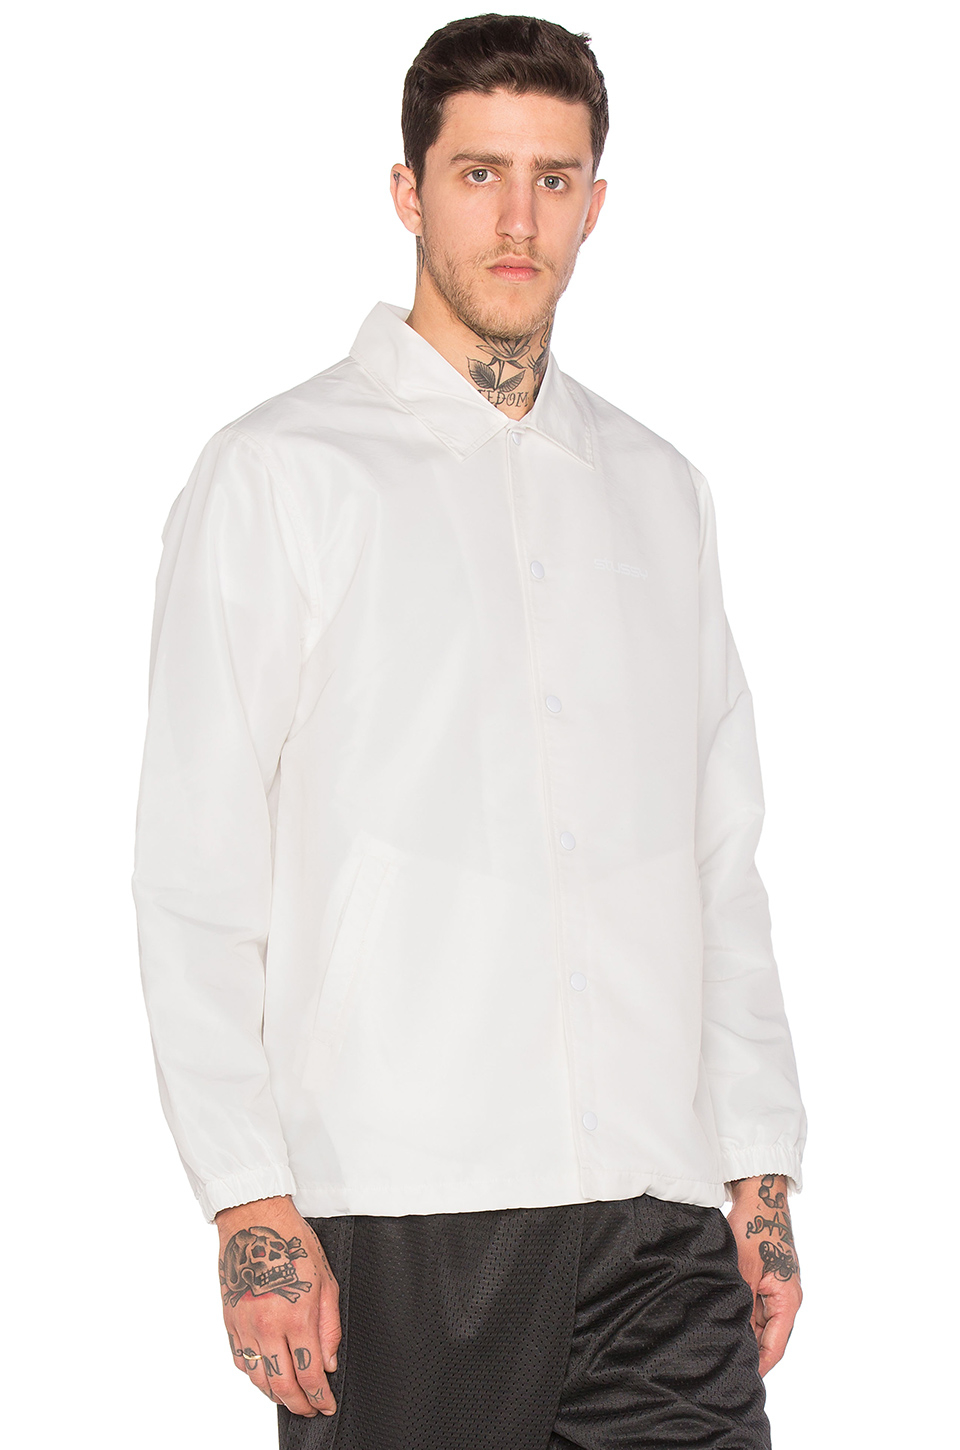 Lyst - Stussy Logo Coach Jacket in White for Men